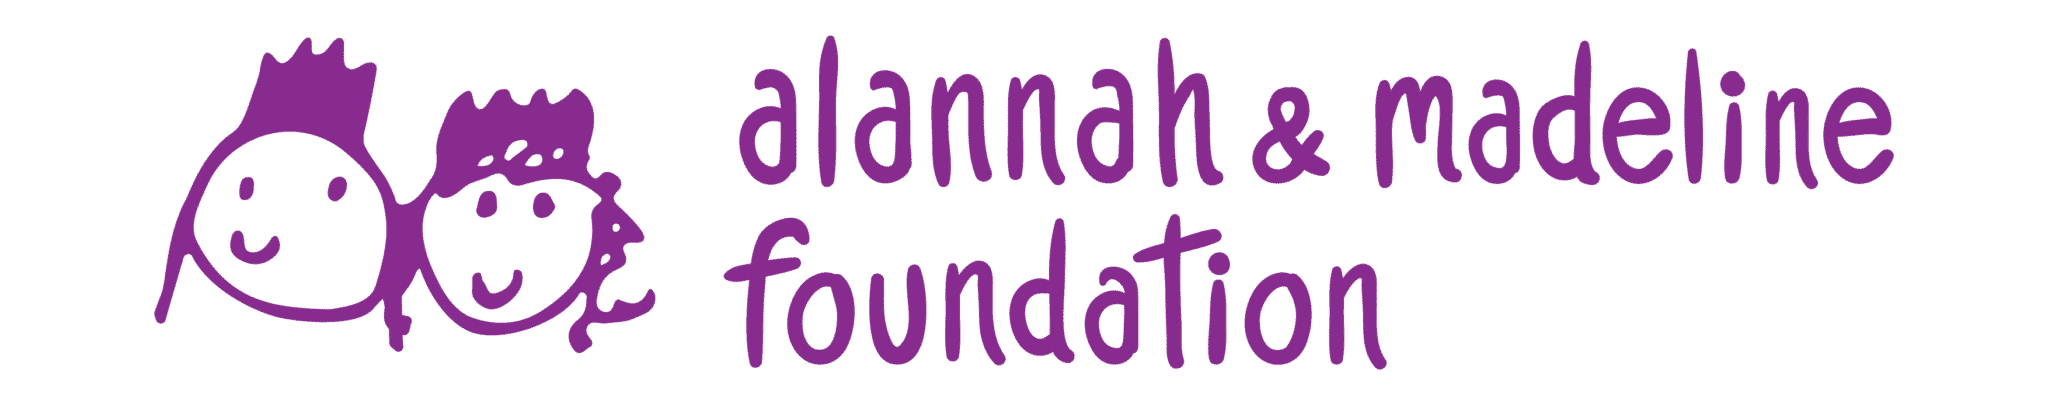 Alannah & Madeline Foundation Raffle